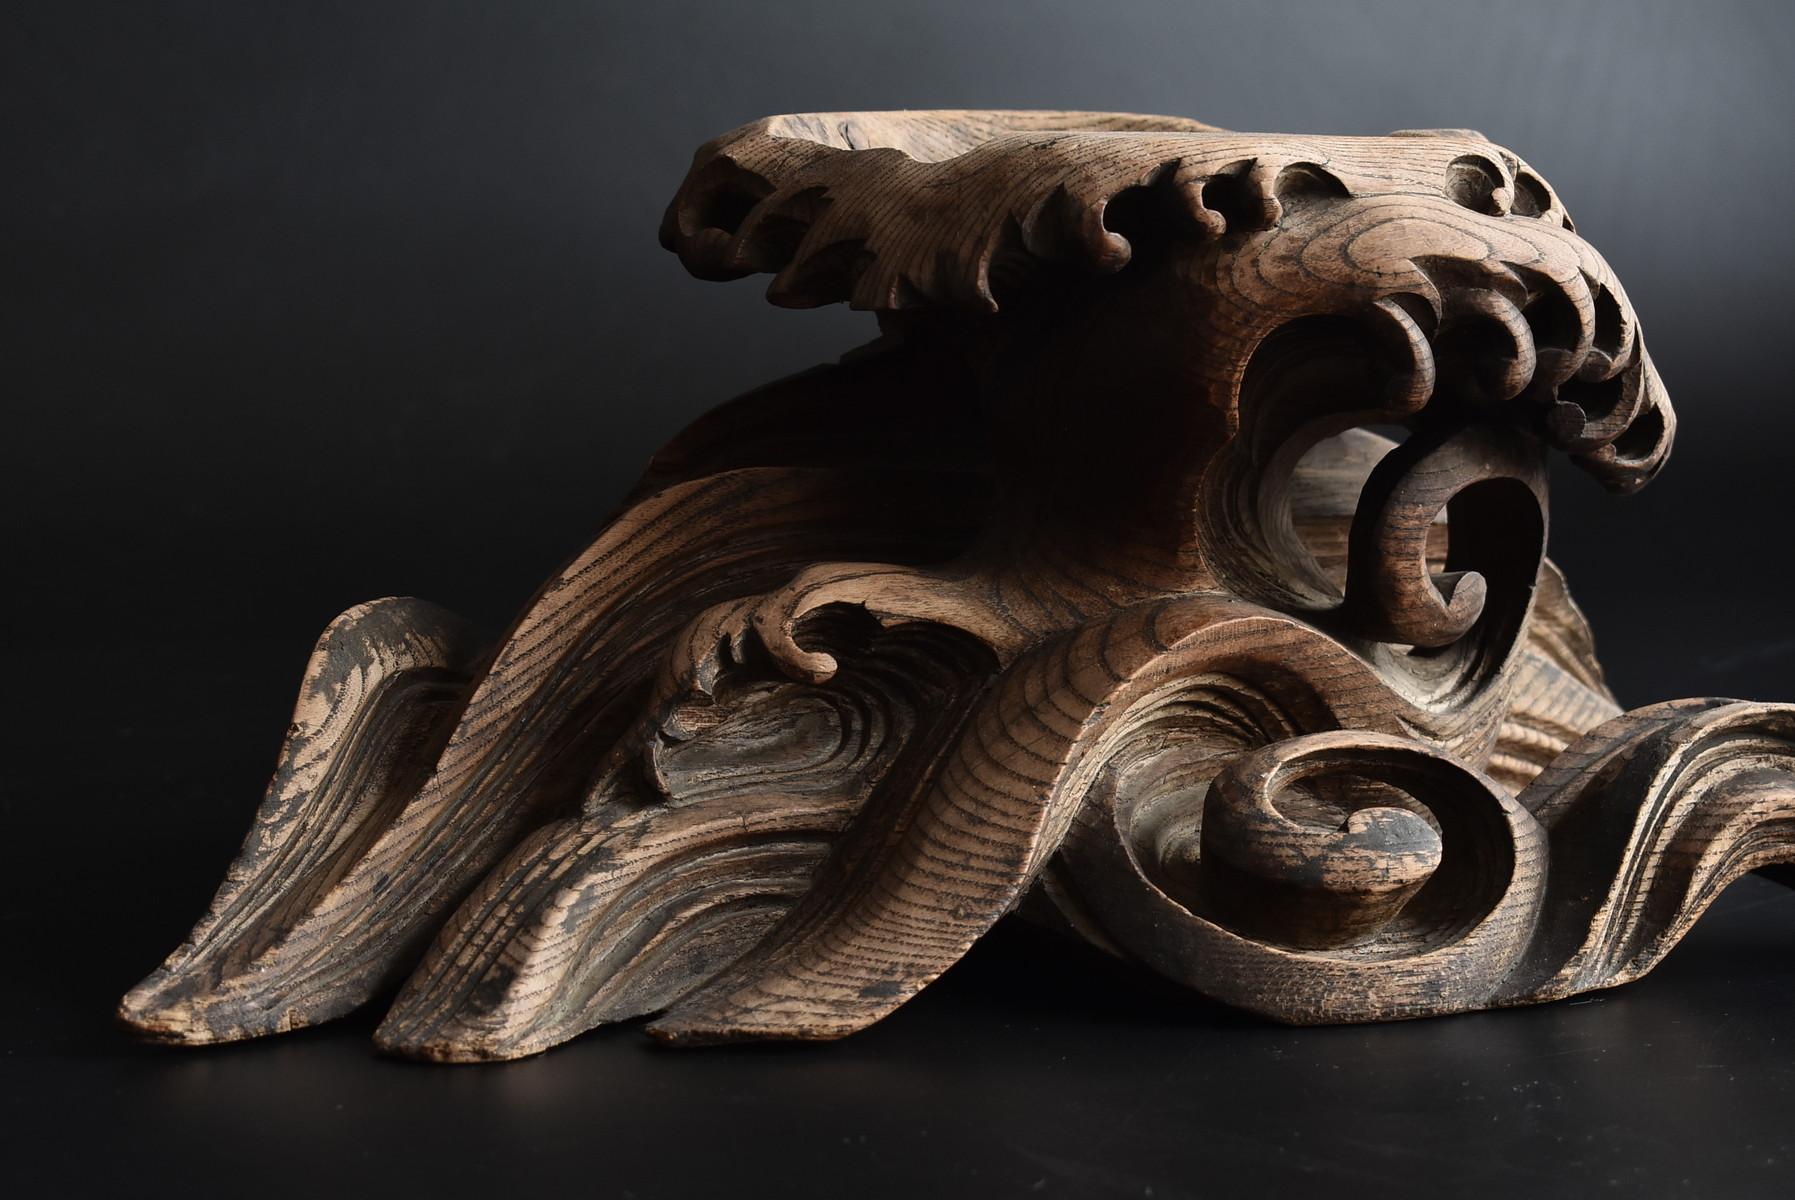 Hand-Carved Japanese Antique Wood Carving Wavy Figurine / Incense Burner / Decoration Stand